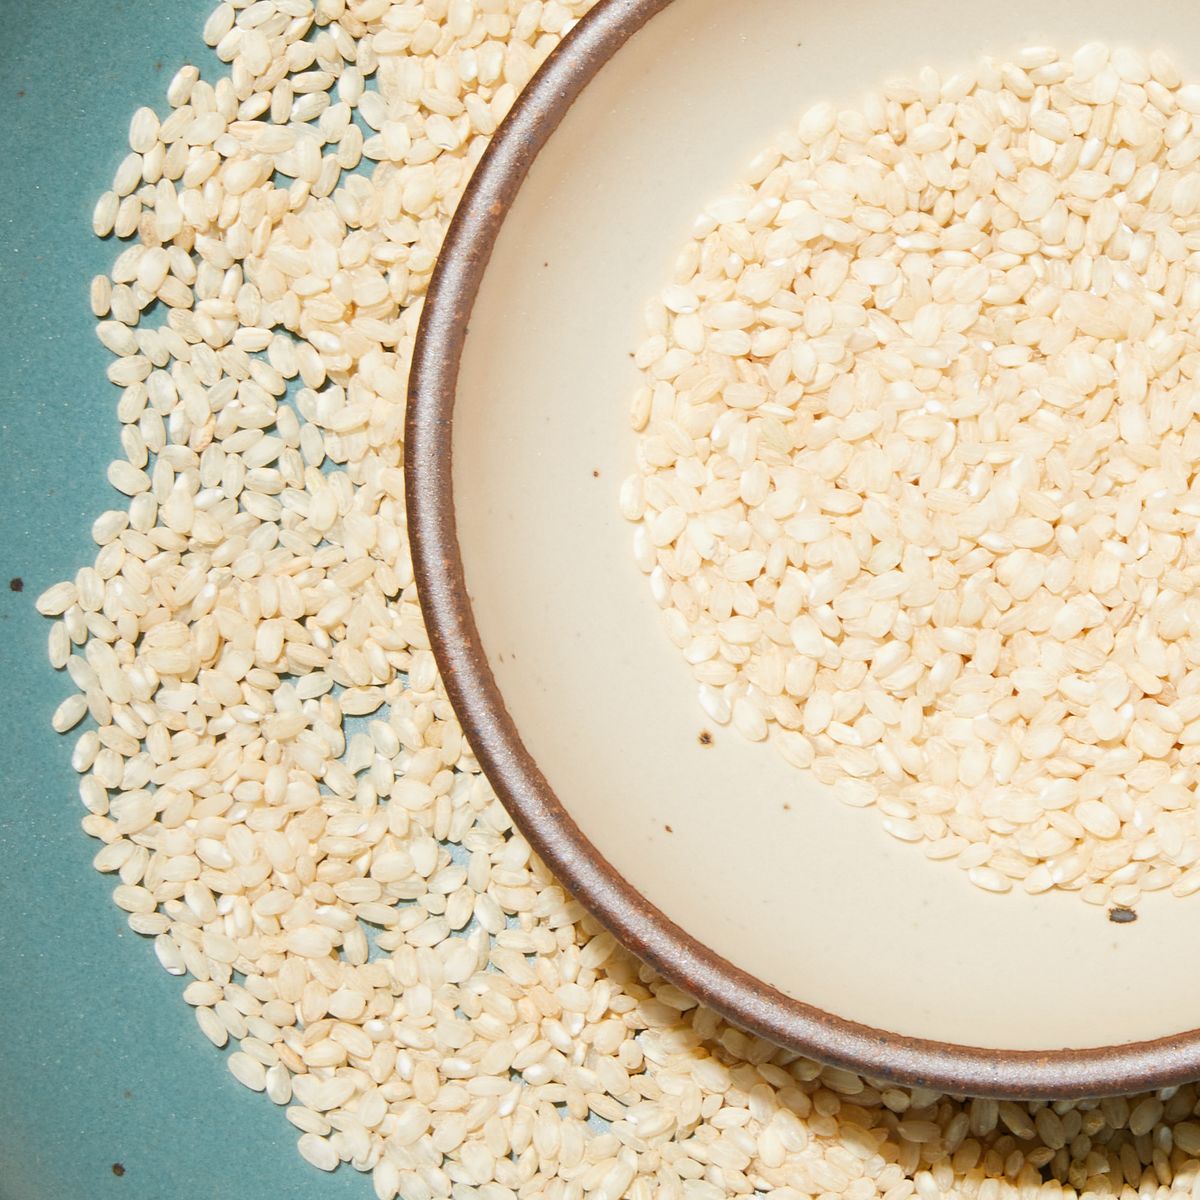 paella rice on plates